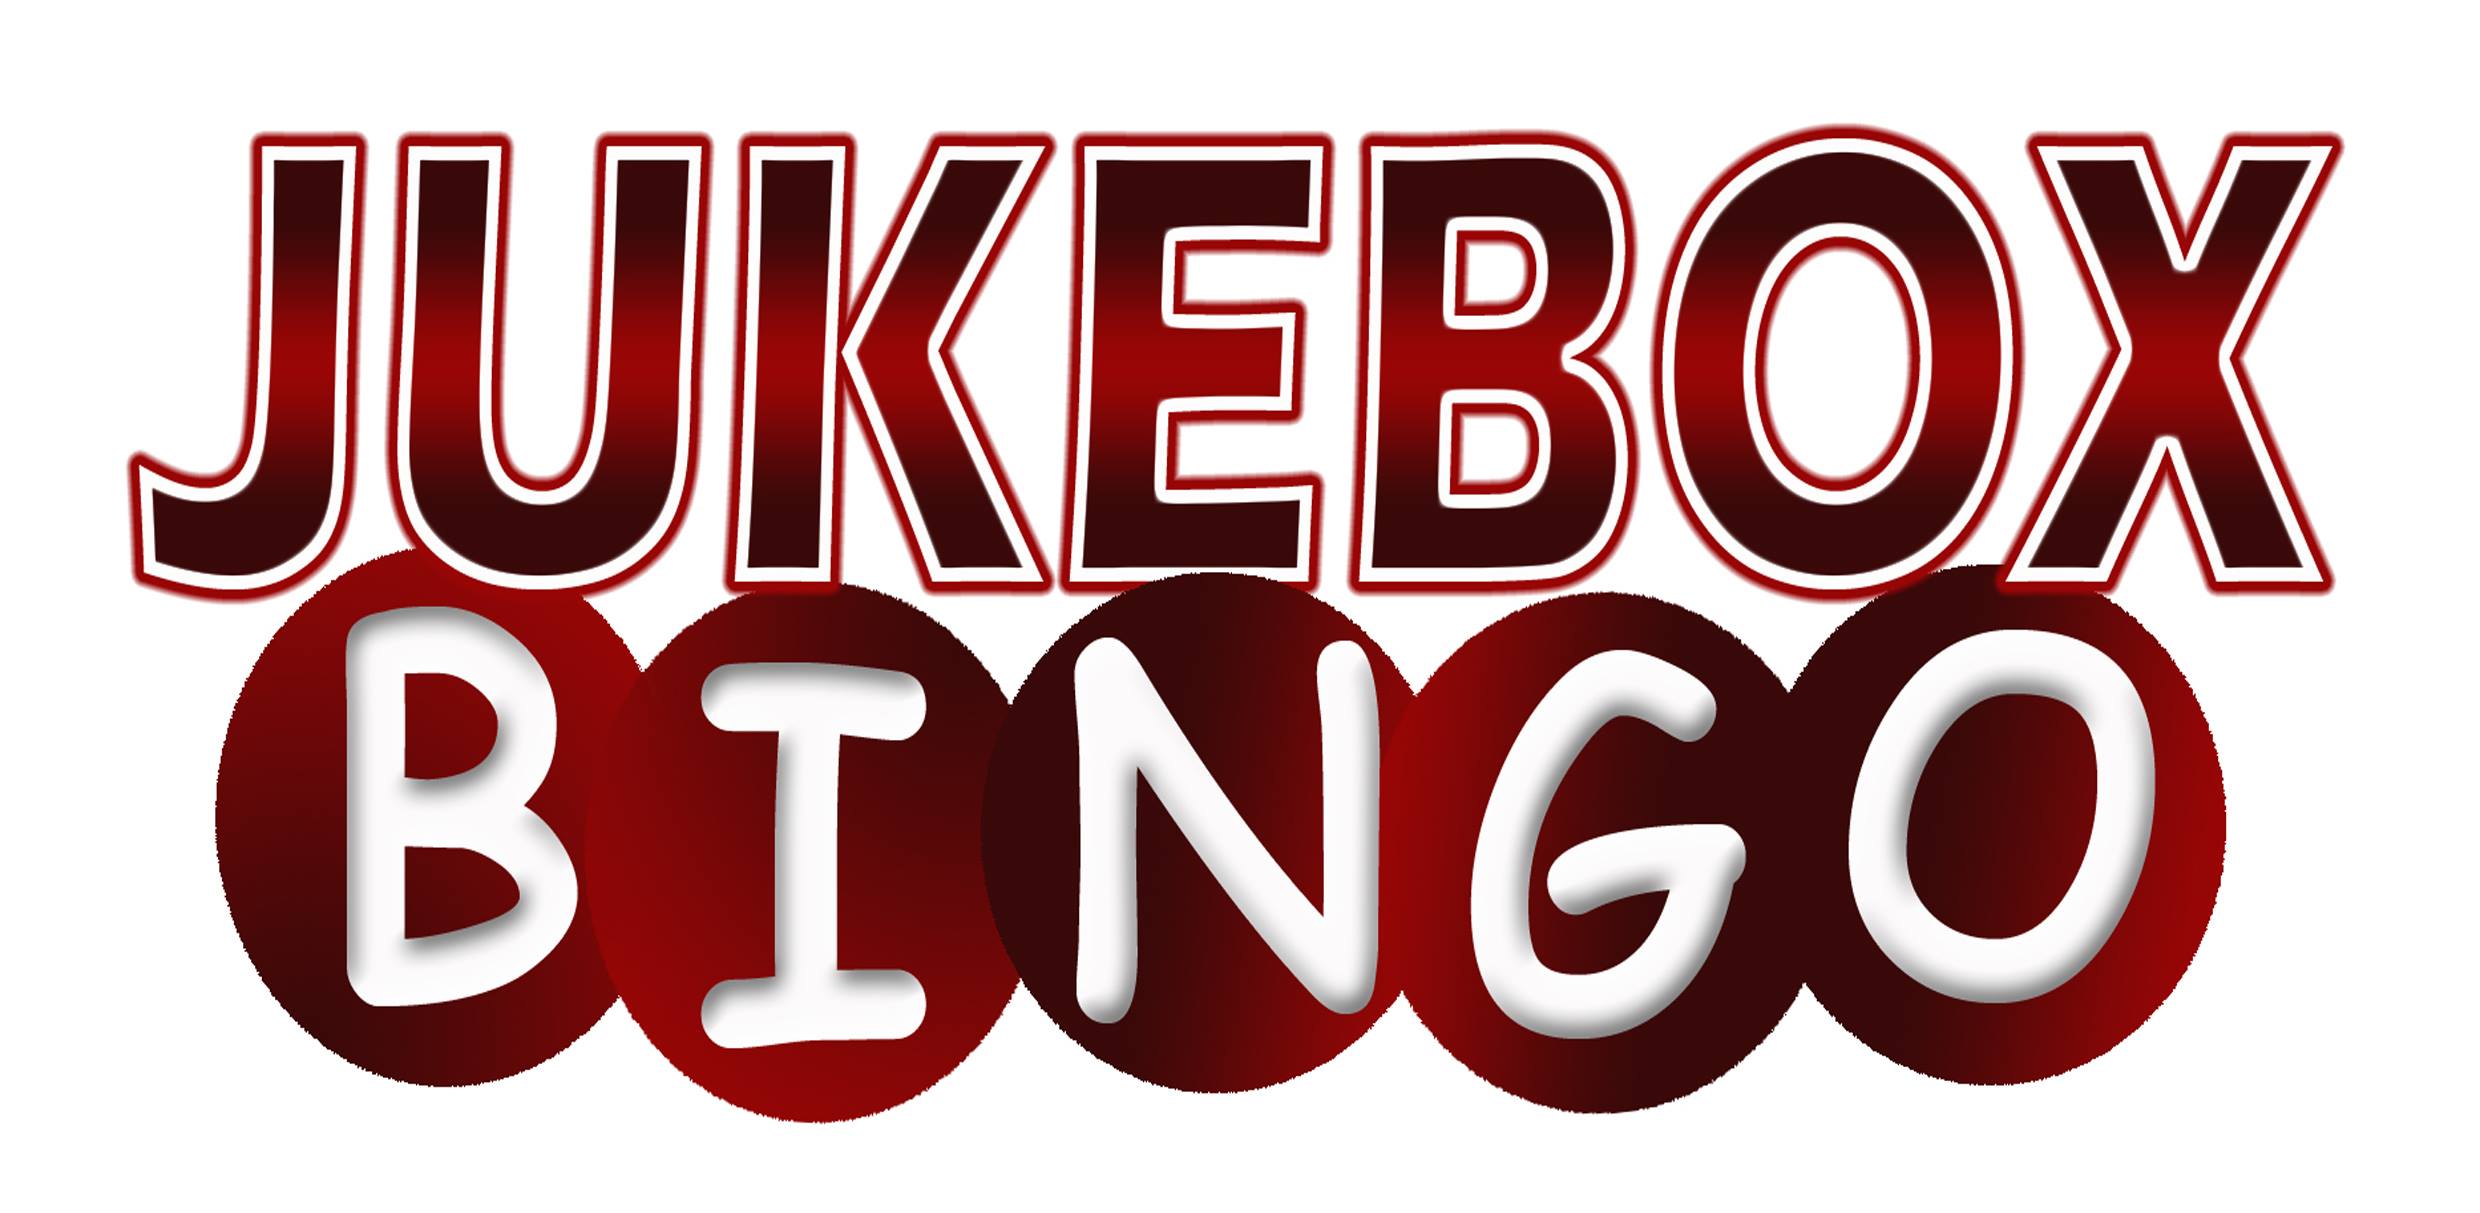 Jukebox Bingo logo